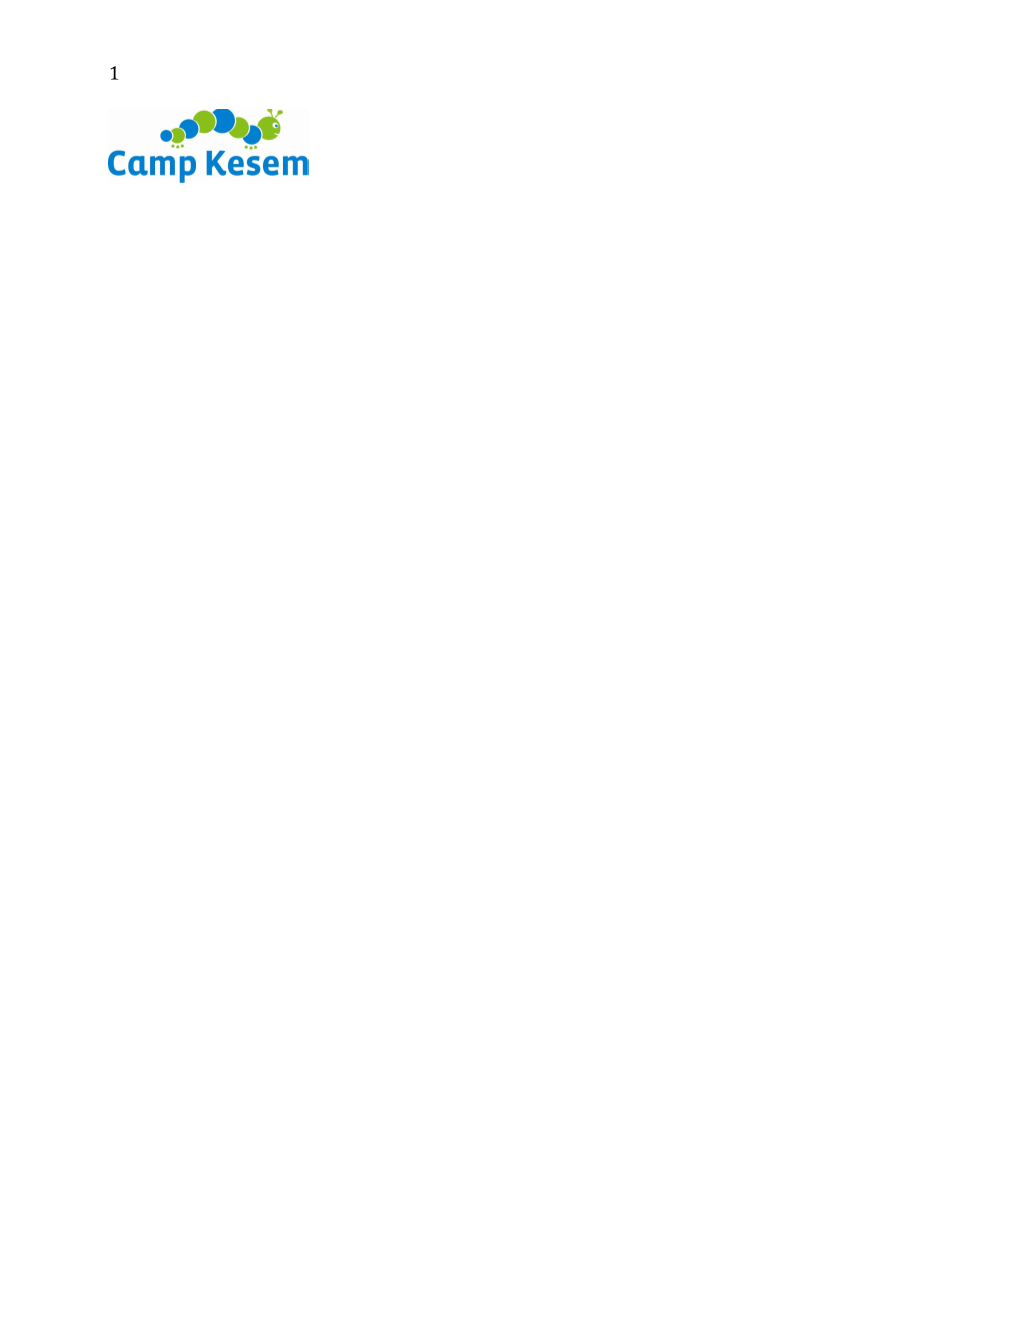 Camp Kesem New Counselor App 2013 s1